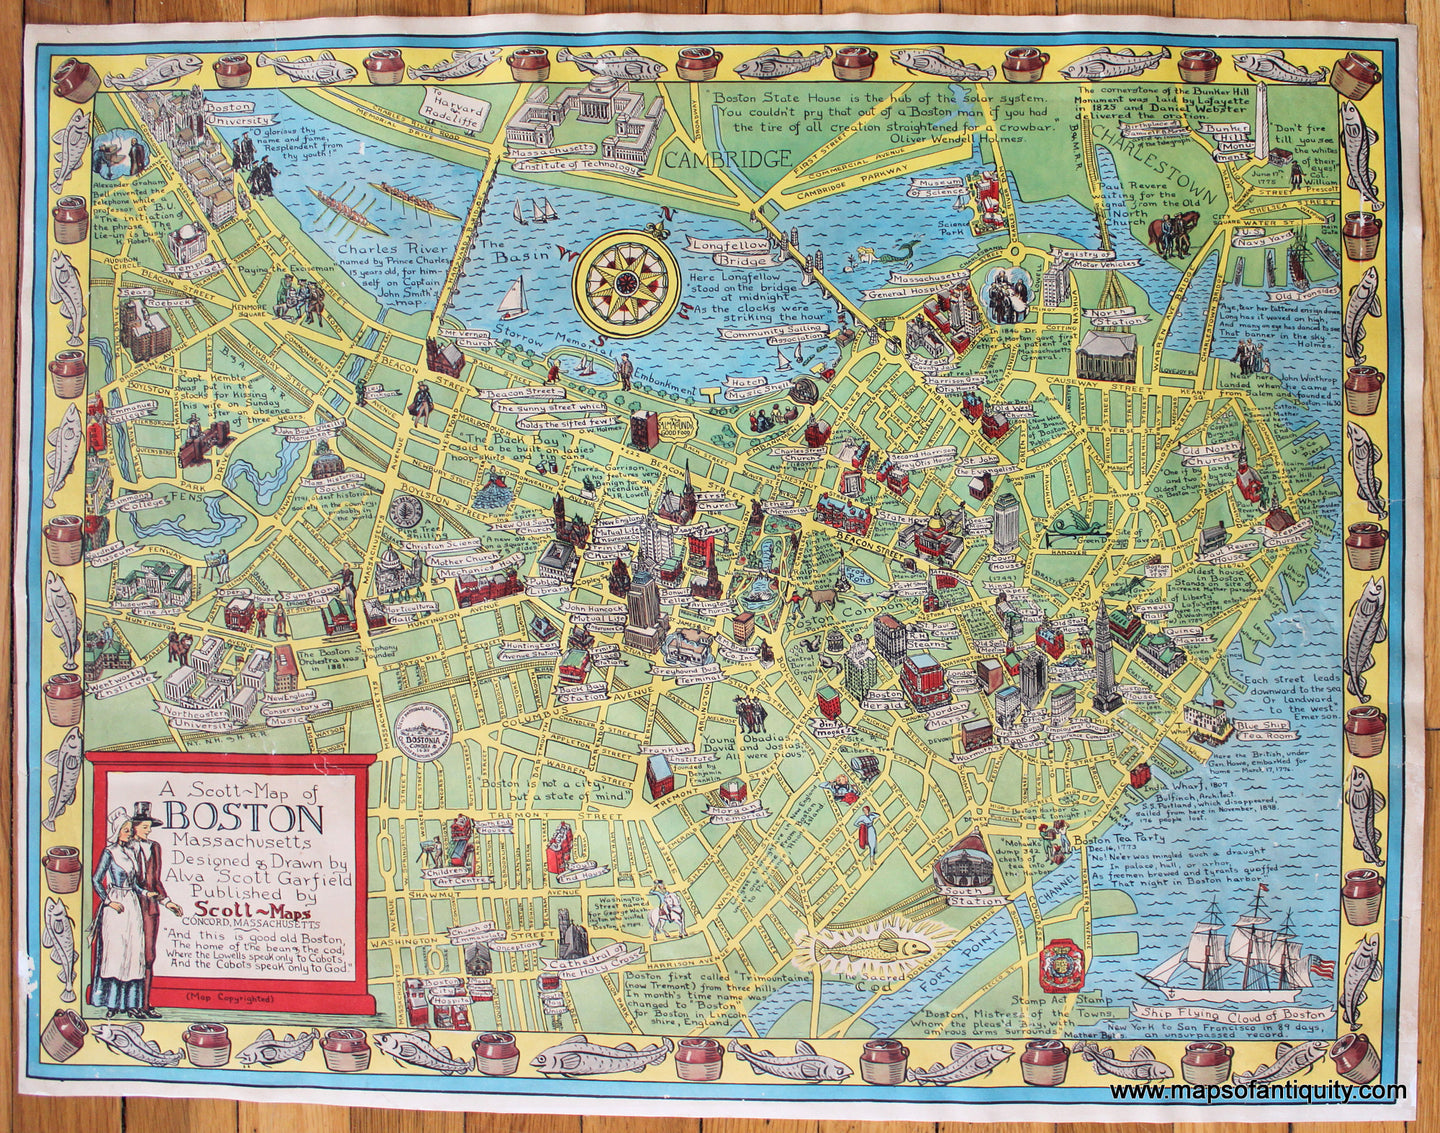 Antique-Pictorial-Map-Scott-Map-Boston-Massachusetts-Alva-Scott-Garfield-1960-1960s-1900s-Maps-of-Antiquity